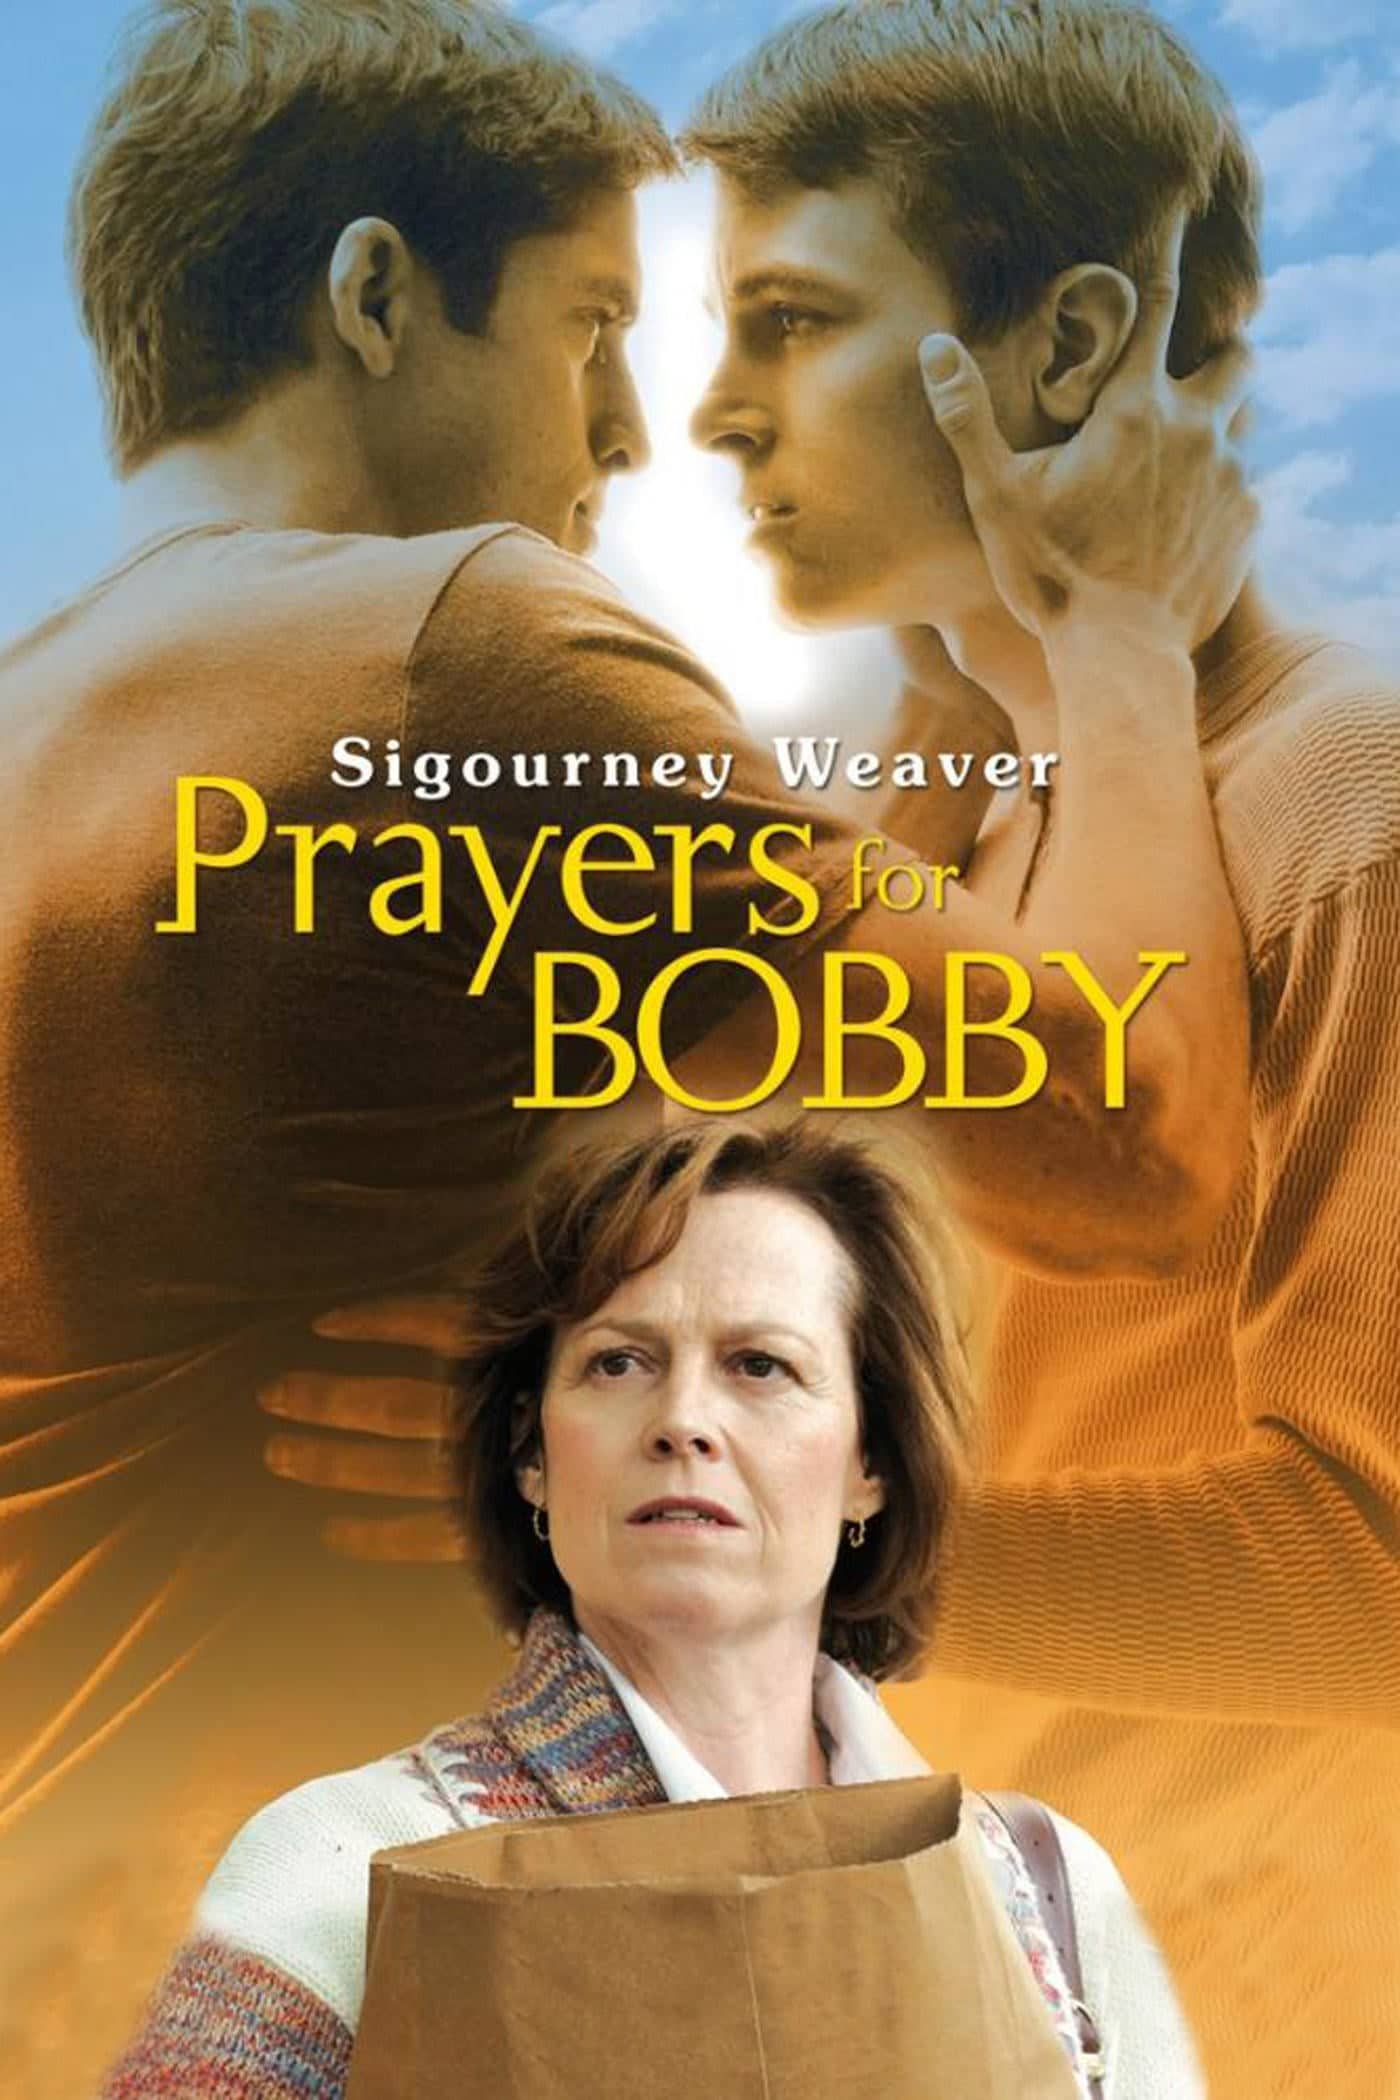 Plakat von "Prayers for Bobby"